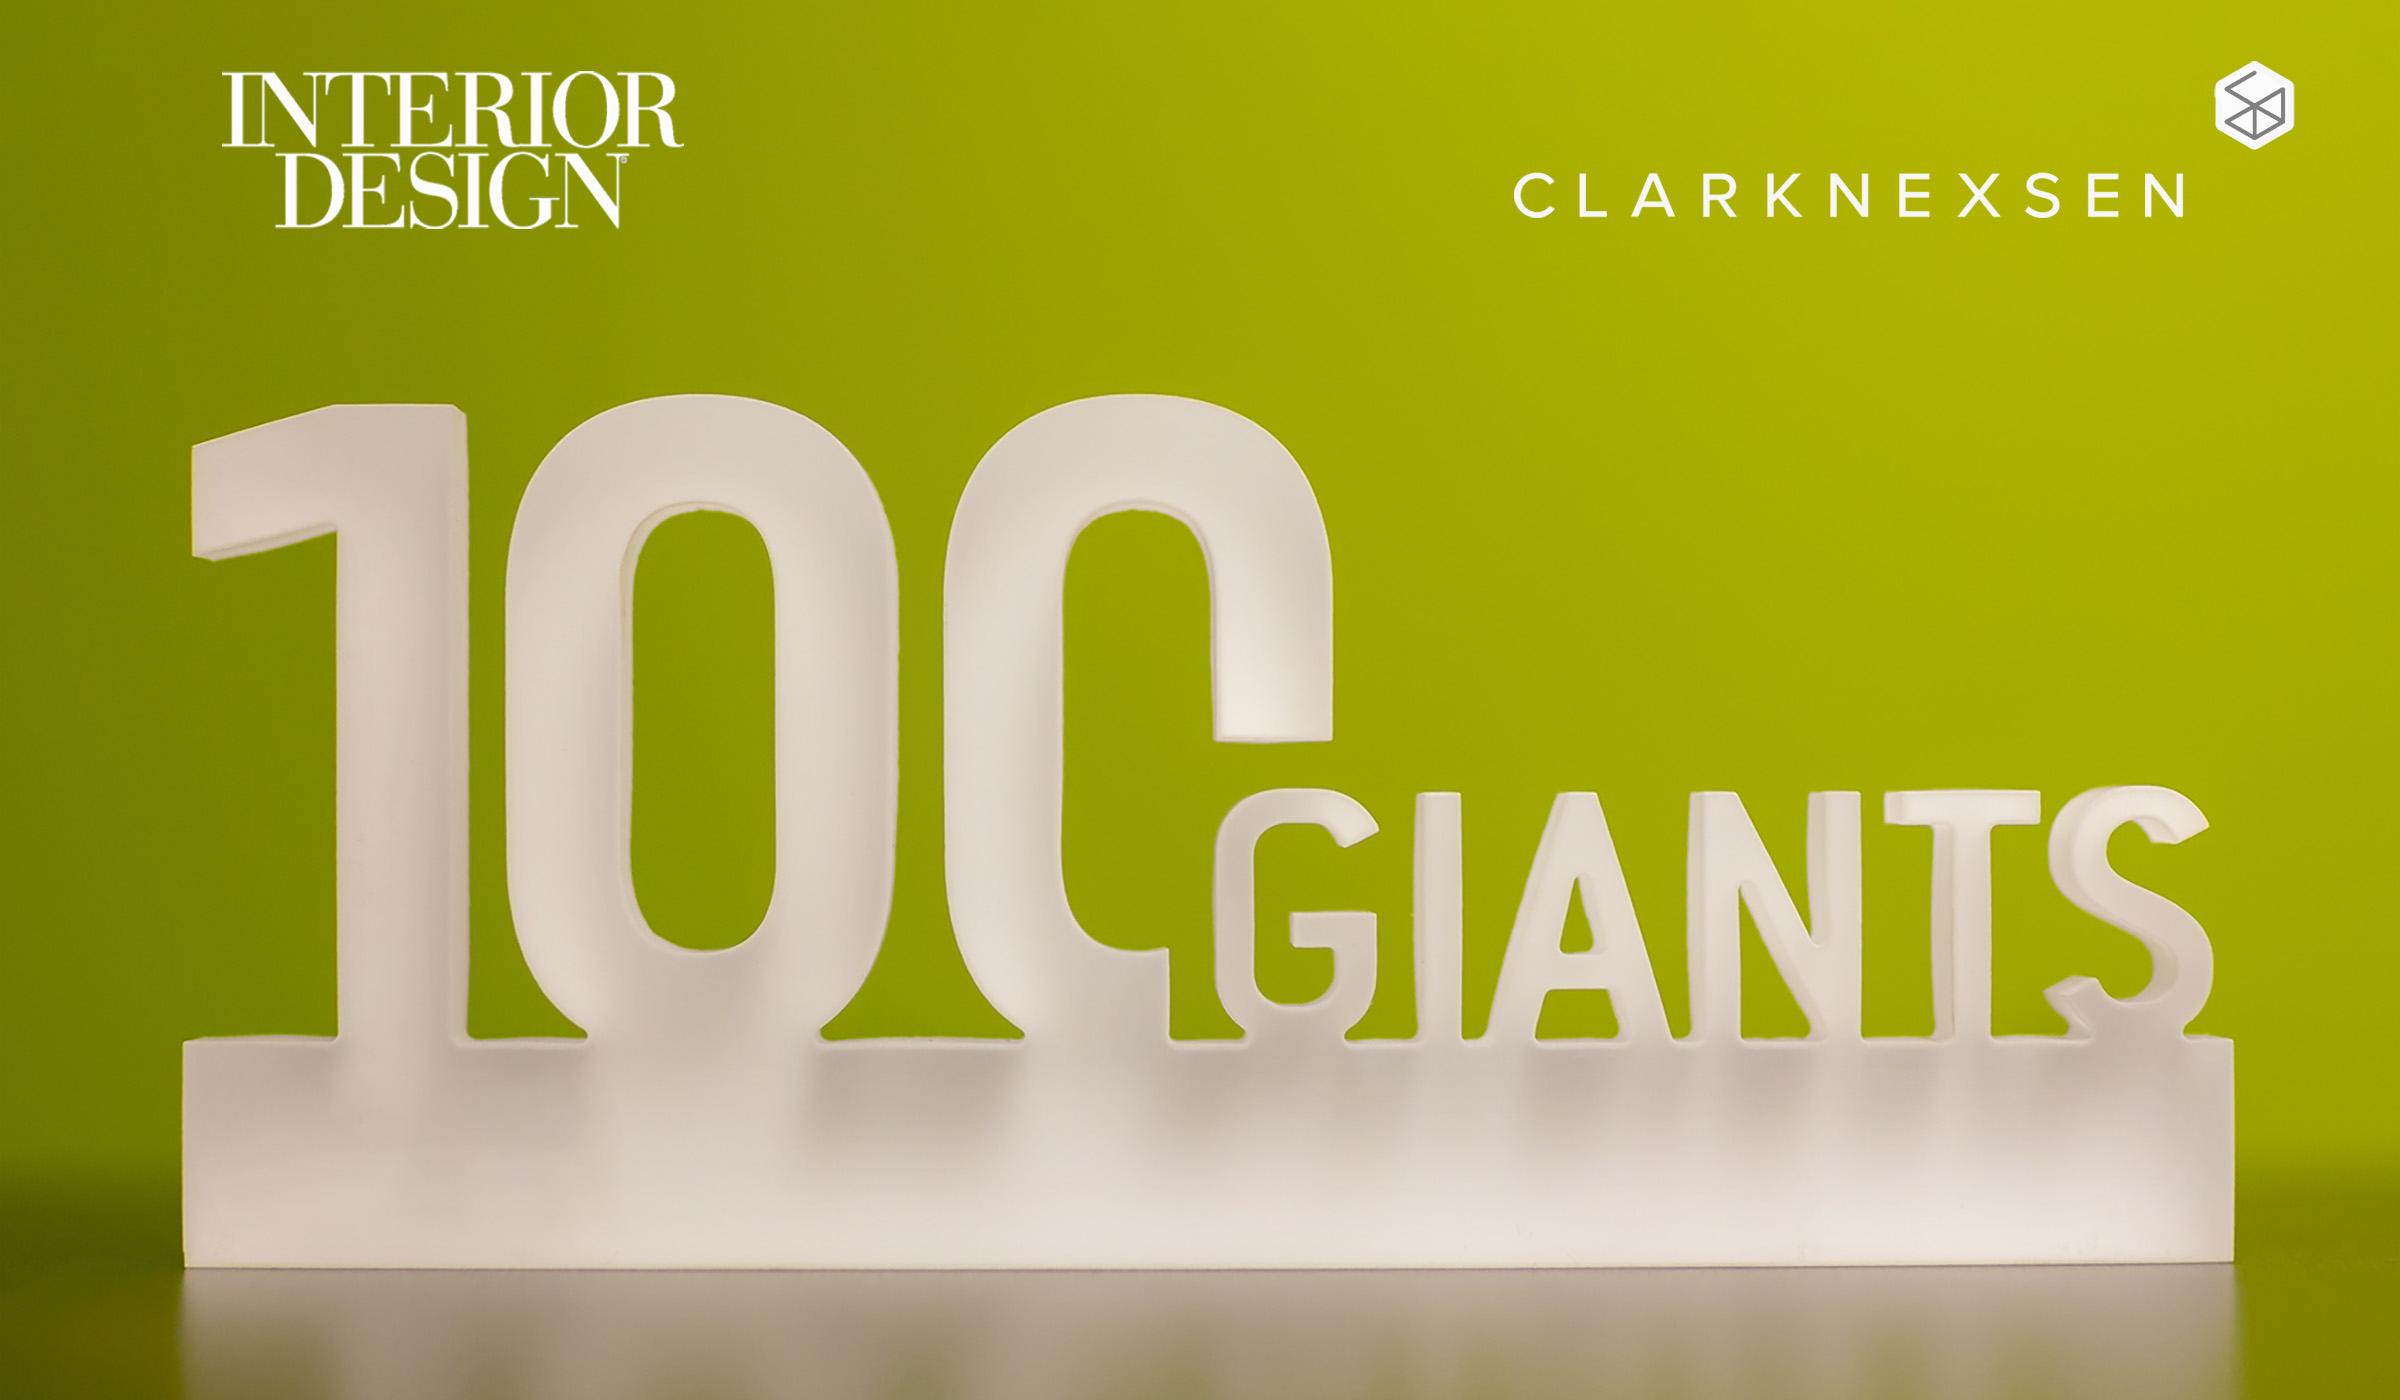 Clark Nexsen ranked among Interior Design magazine's Top 200 Giants in 2019